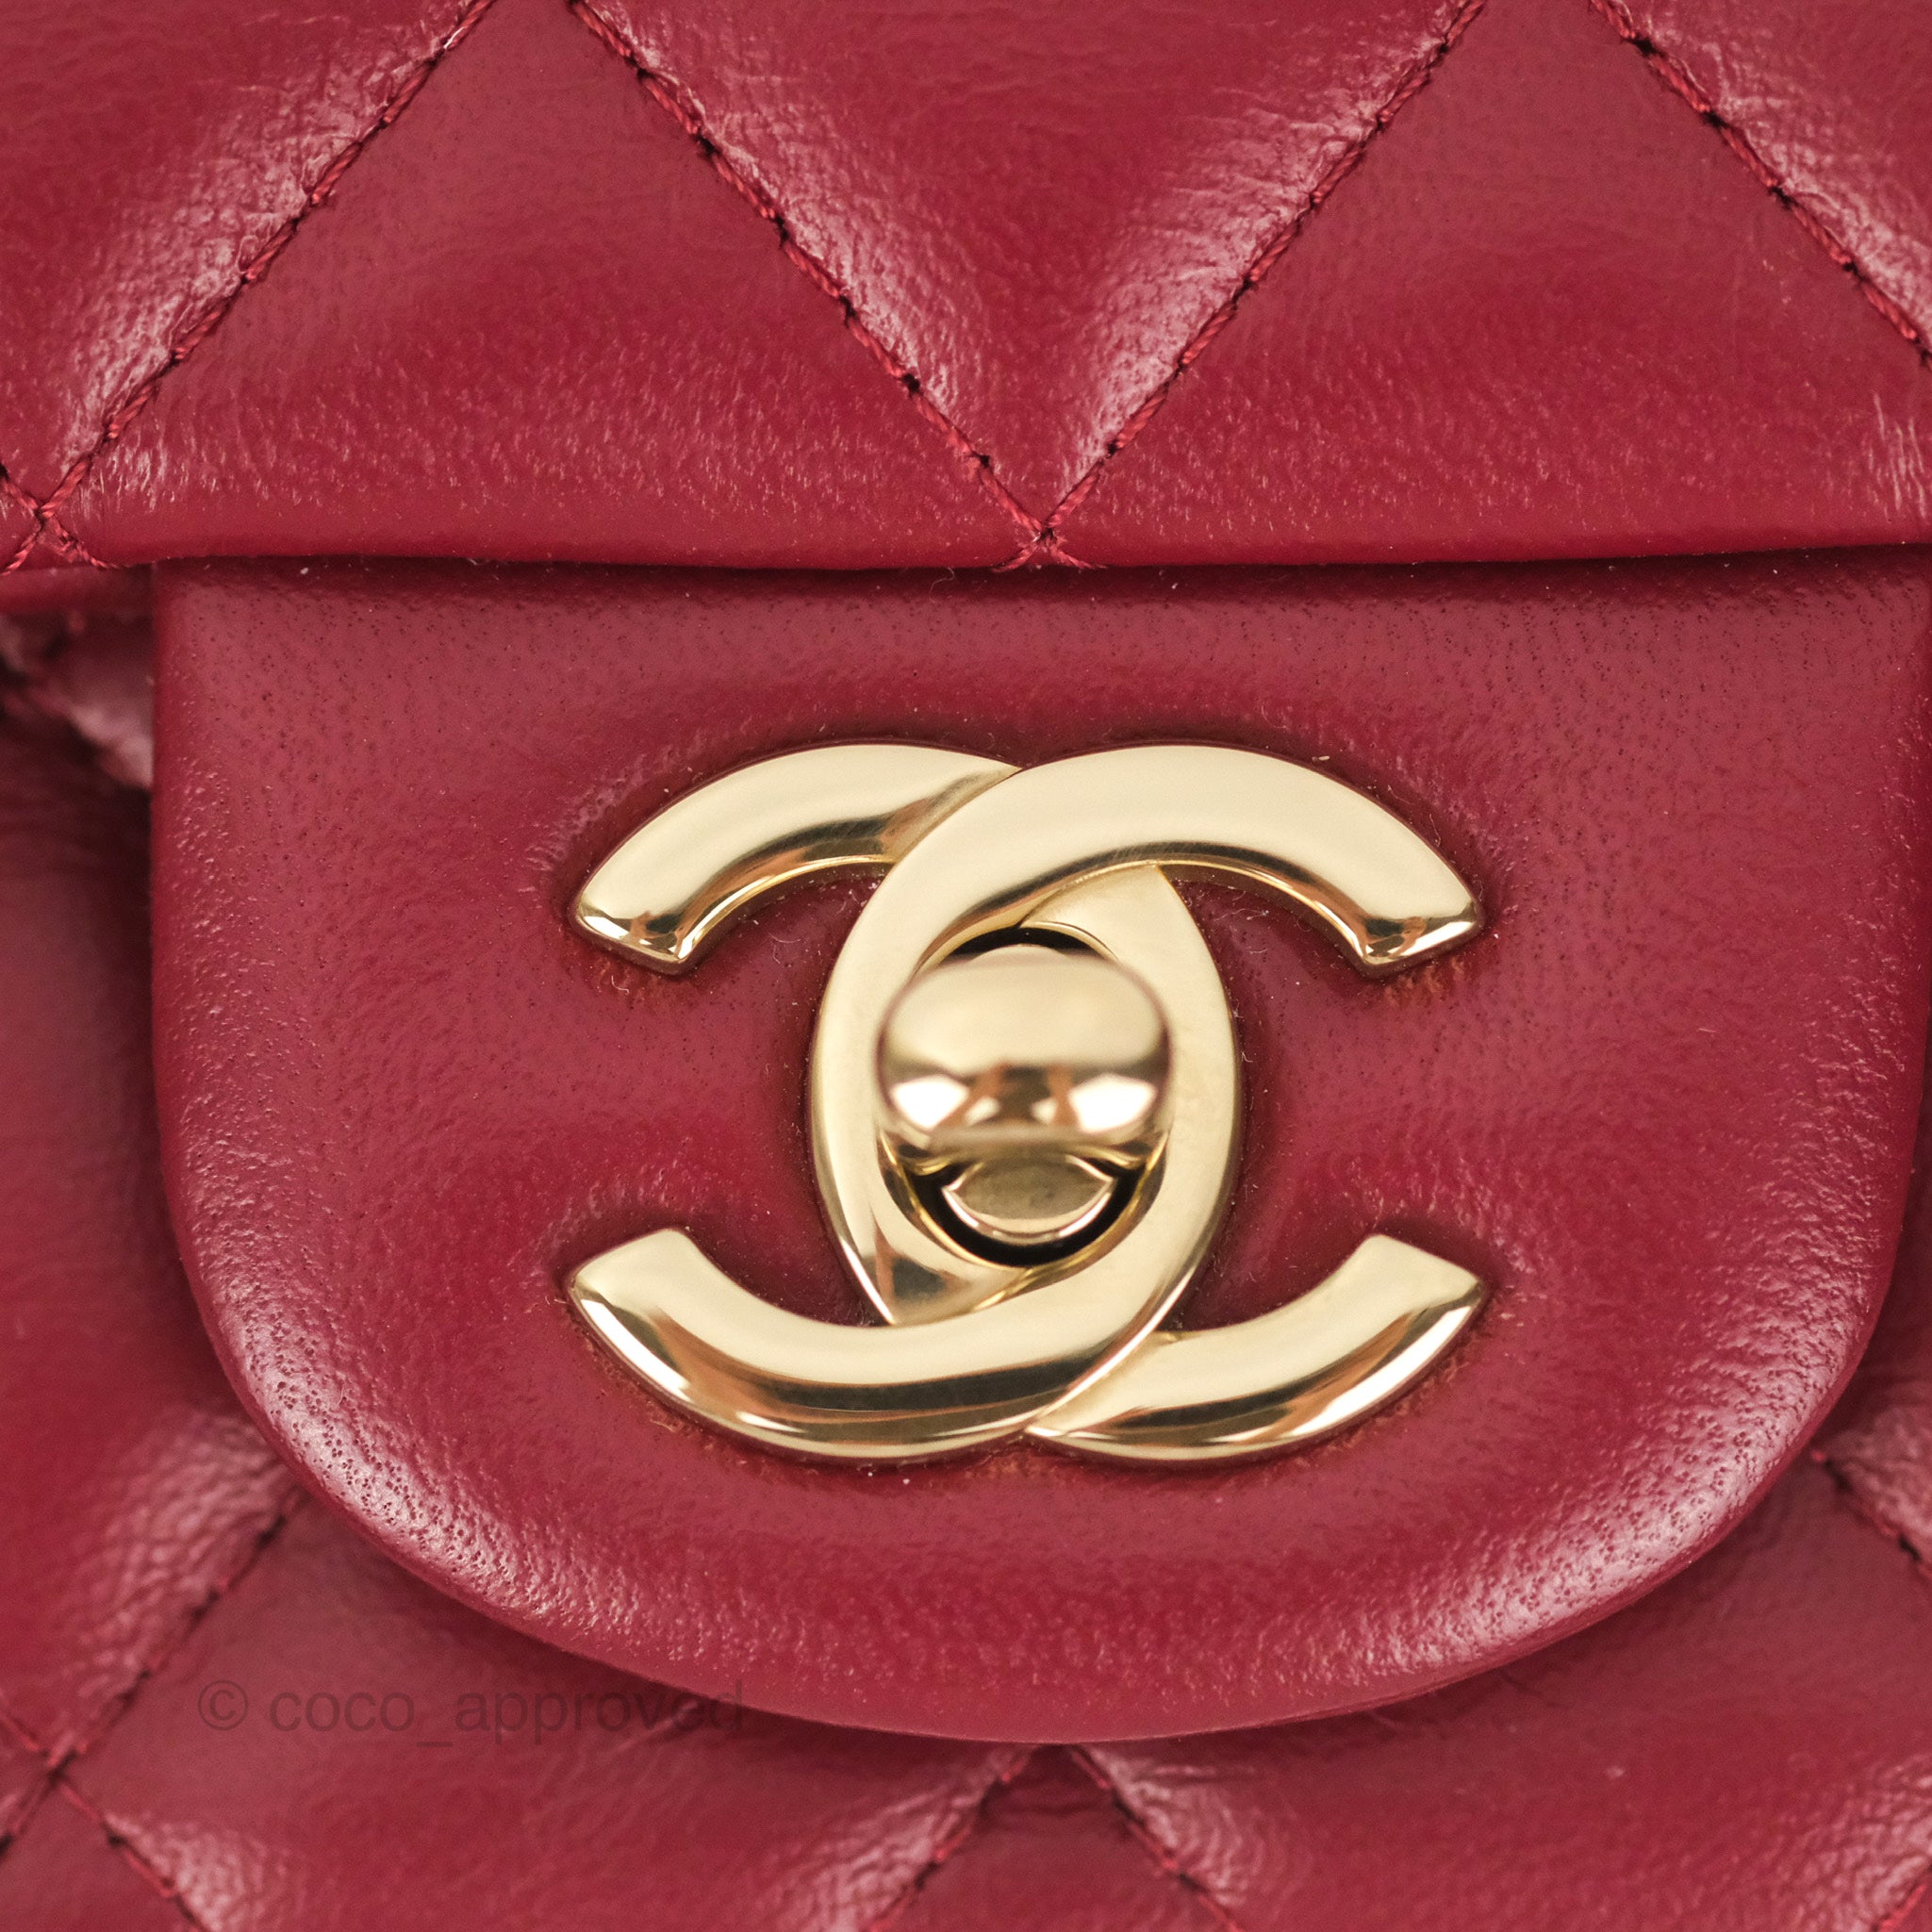 CHANEL Pearl Red Caviar Leather Mini Rectangular Flap Bag-US